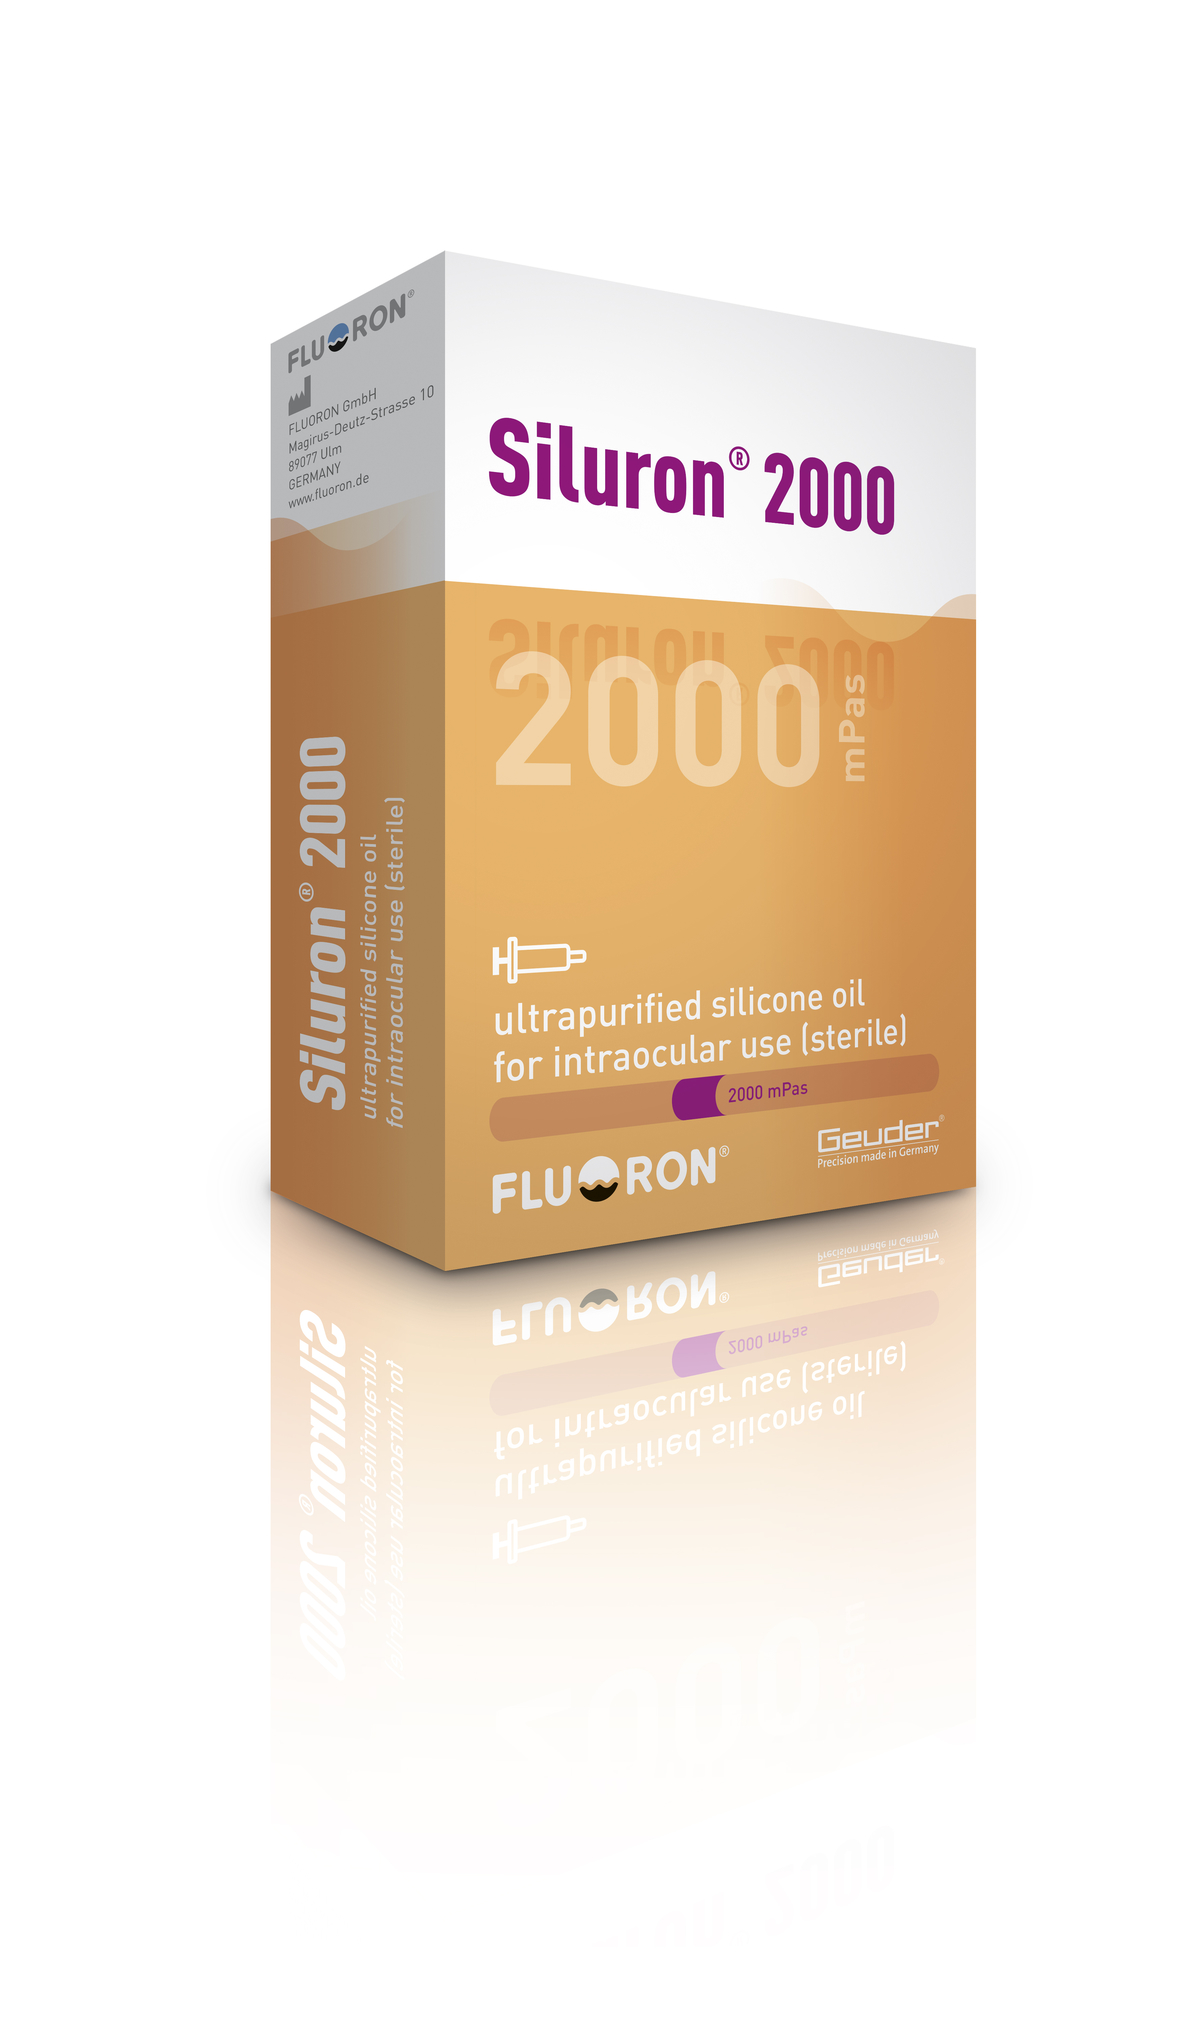 csm_Packshot-Siluron-2000-syringe-RGB_retines-ophtalmologies-freedom-medicale